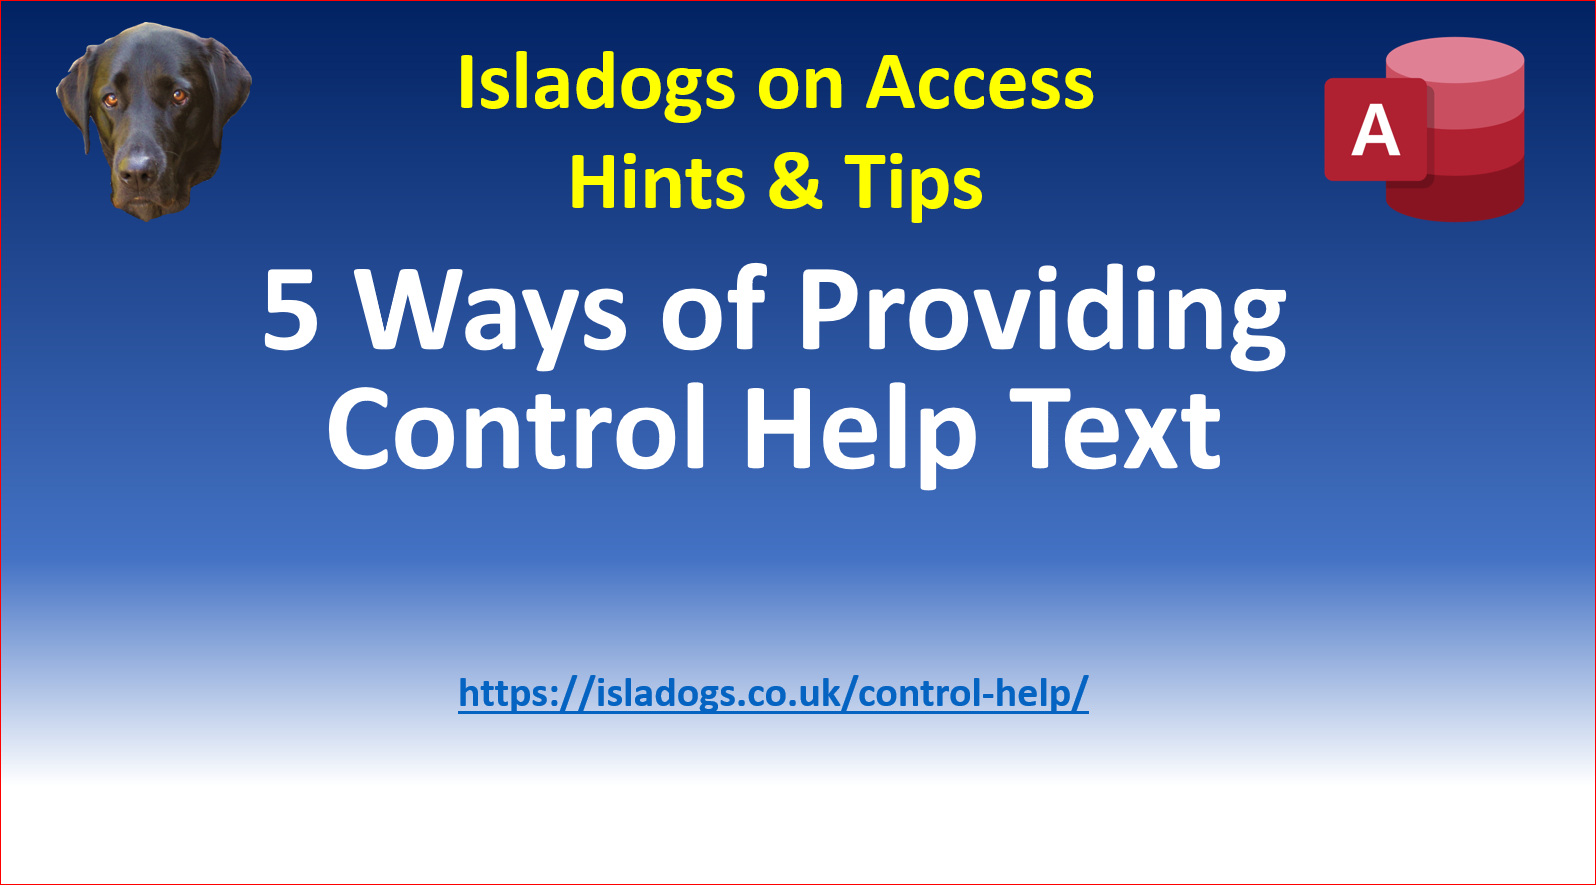 5 Ways of Providing Control Help Text